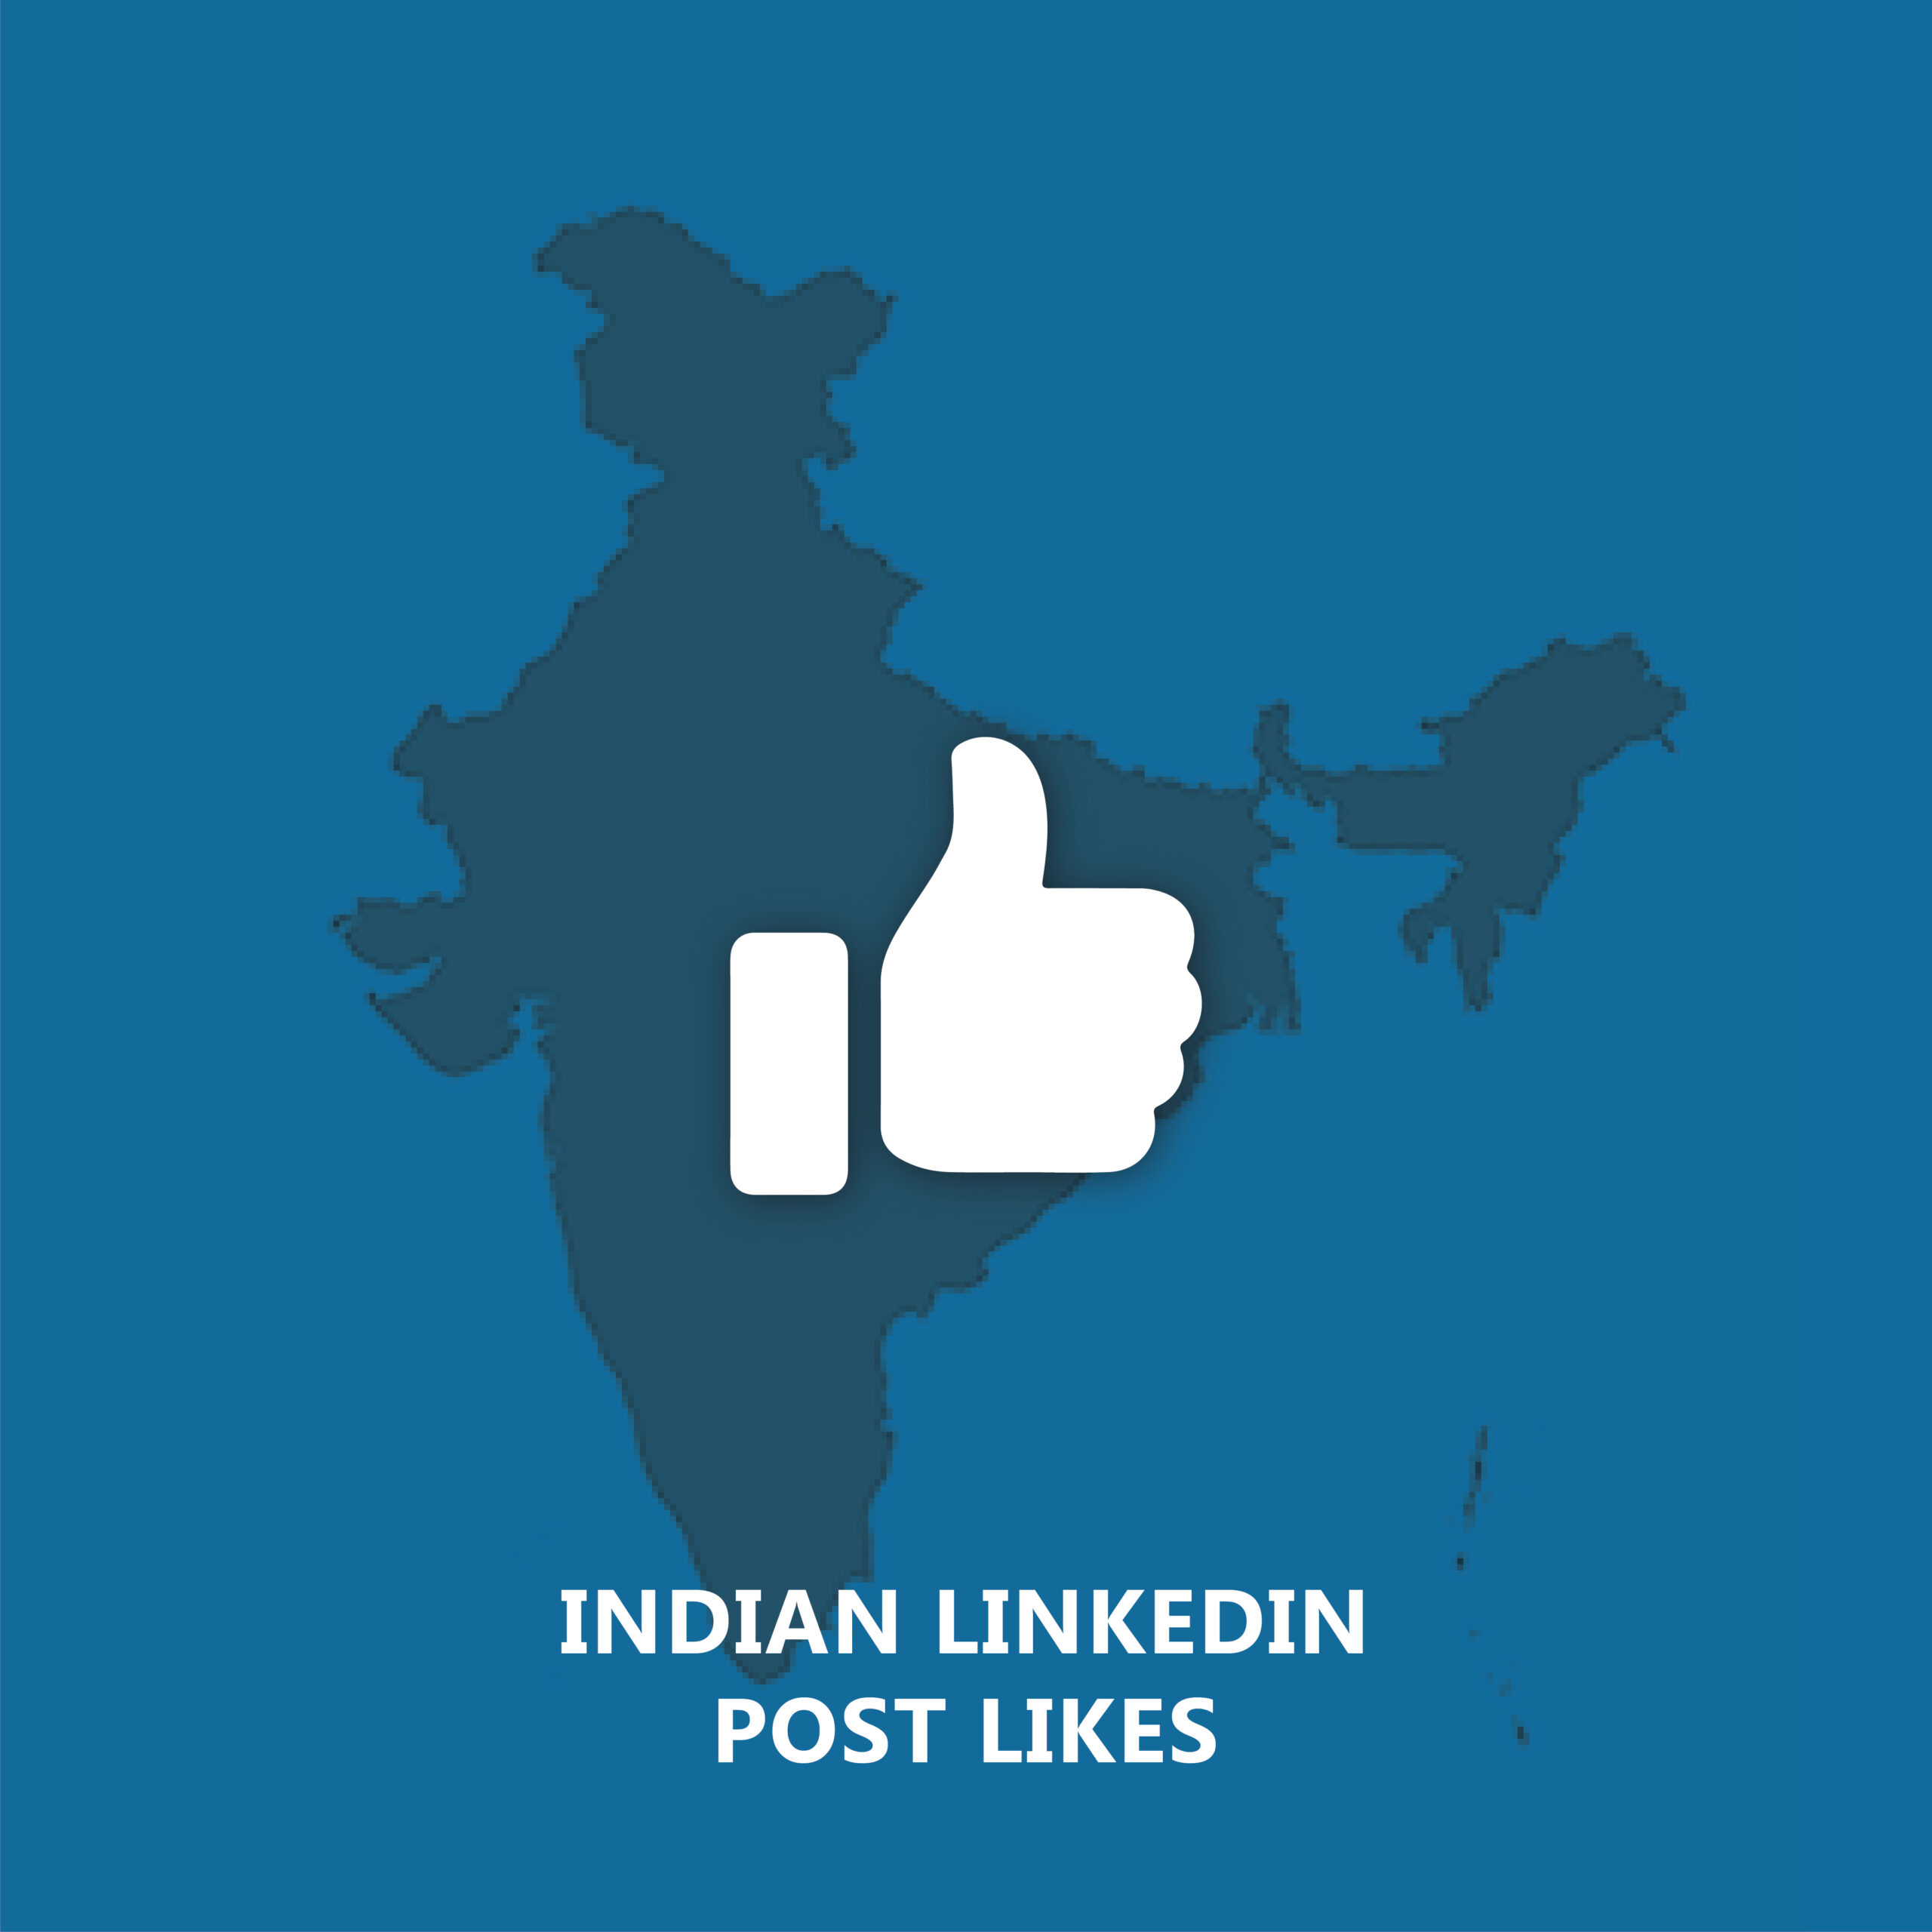 Indian LinkedIn Post Likes